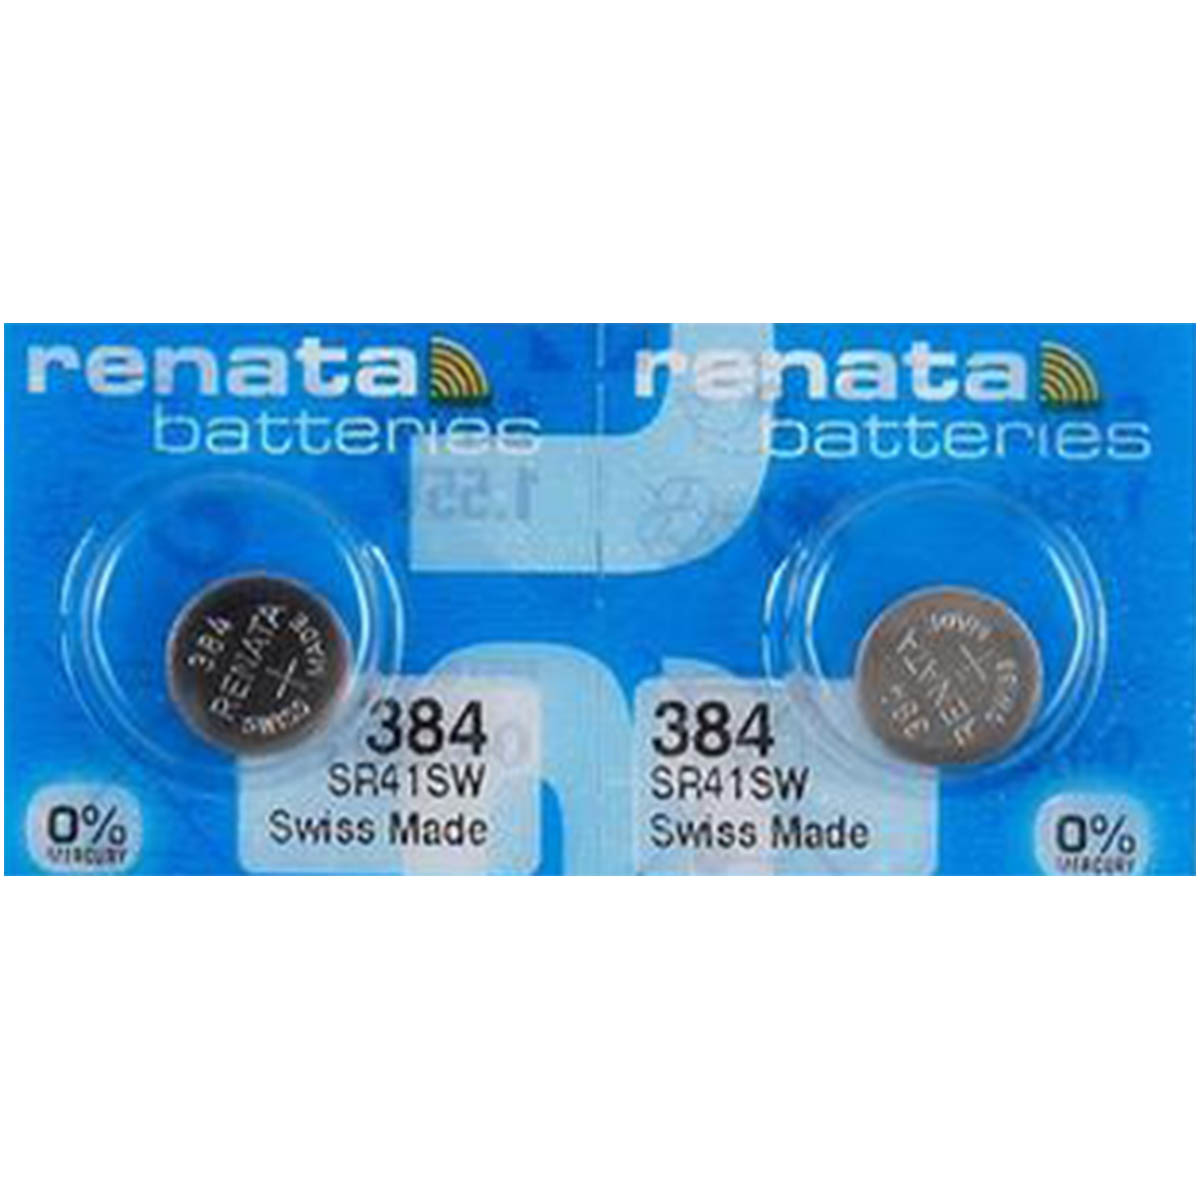 Renata 384 Battery (SR736) Silver Oxide 1.55V (1PC)